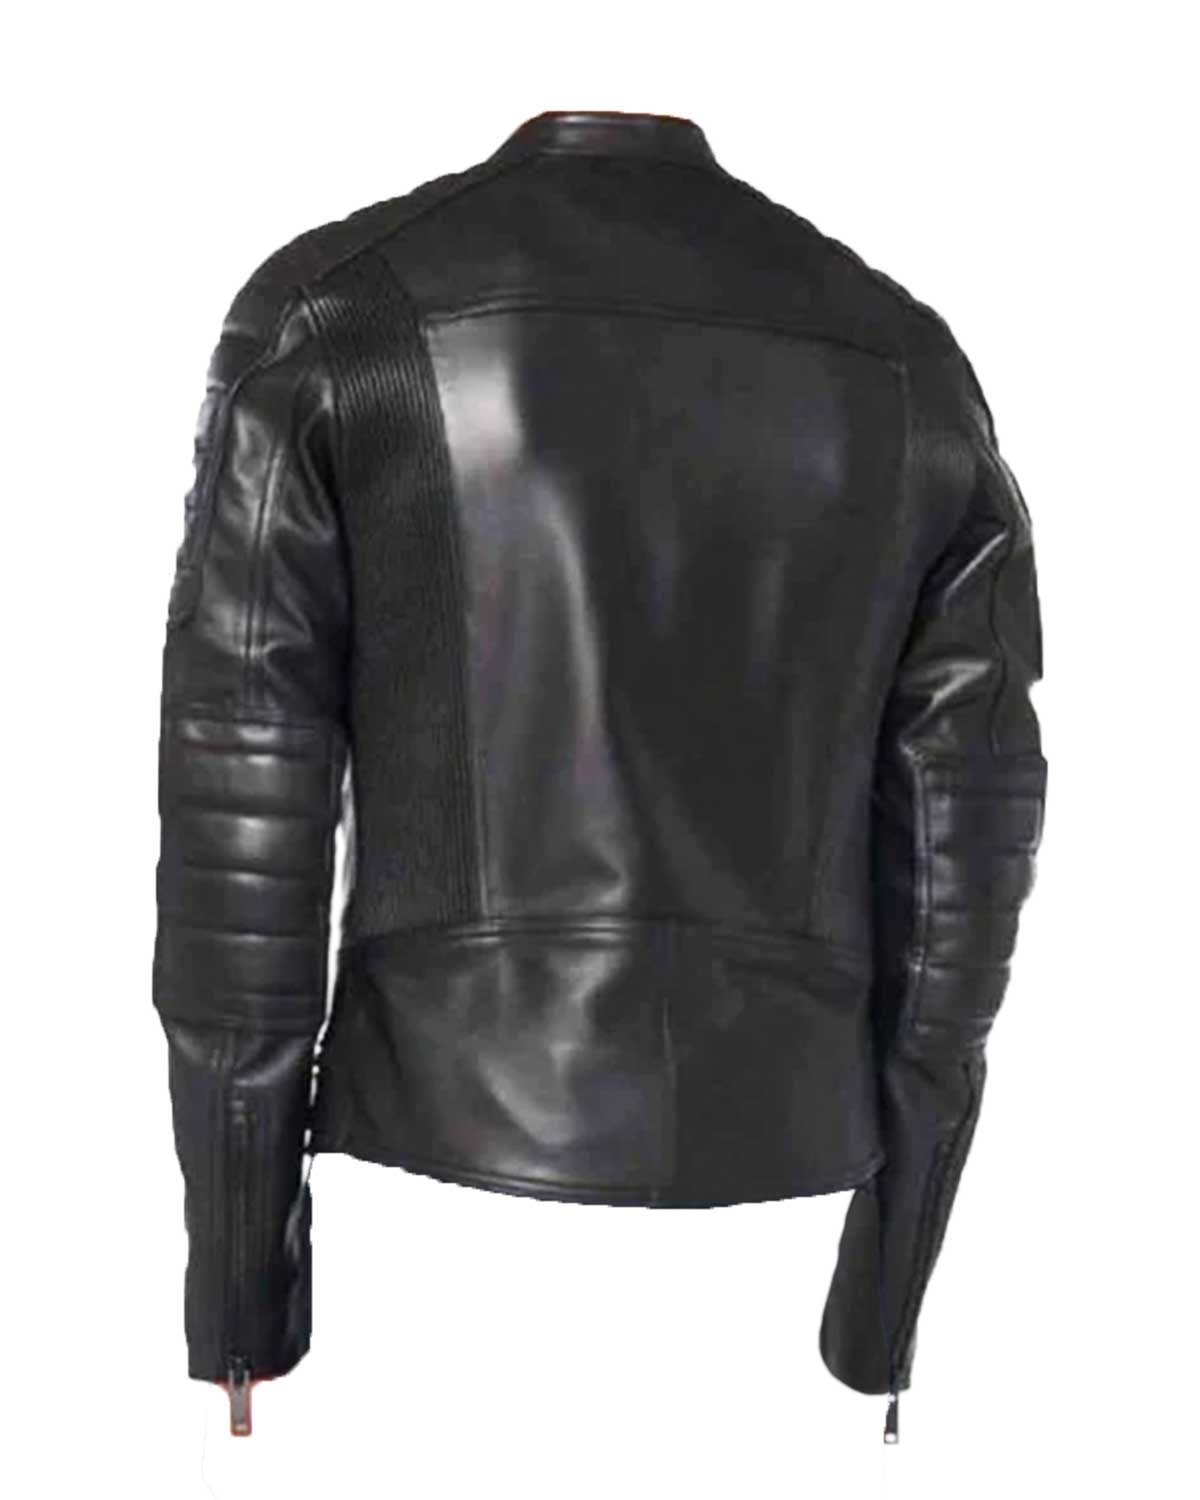 Elite Legends of Tomorrow Eobard Thawne Leather Jacket